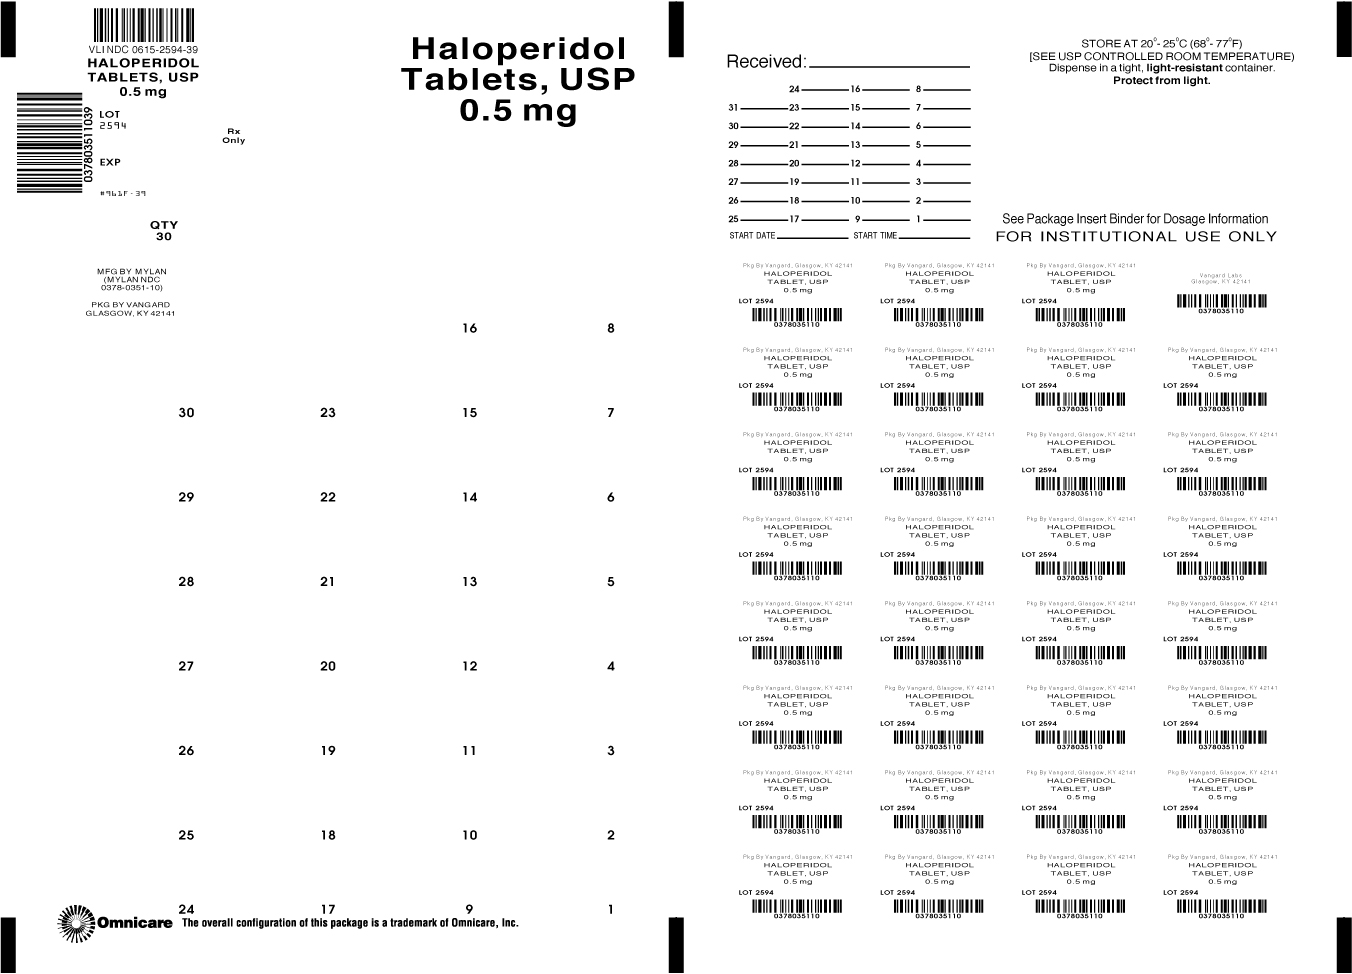 Haloperidol Tablets, USP 0.5mg